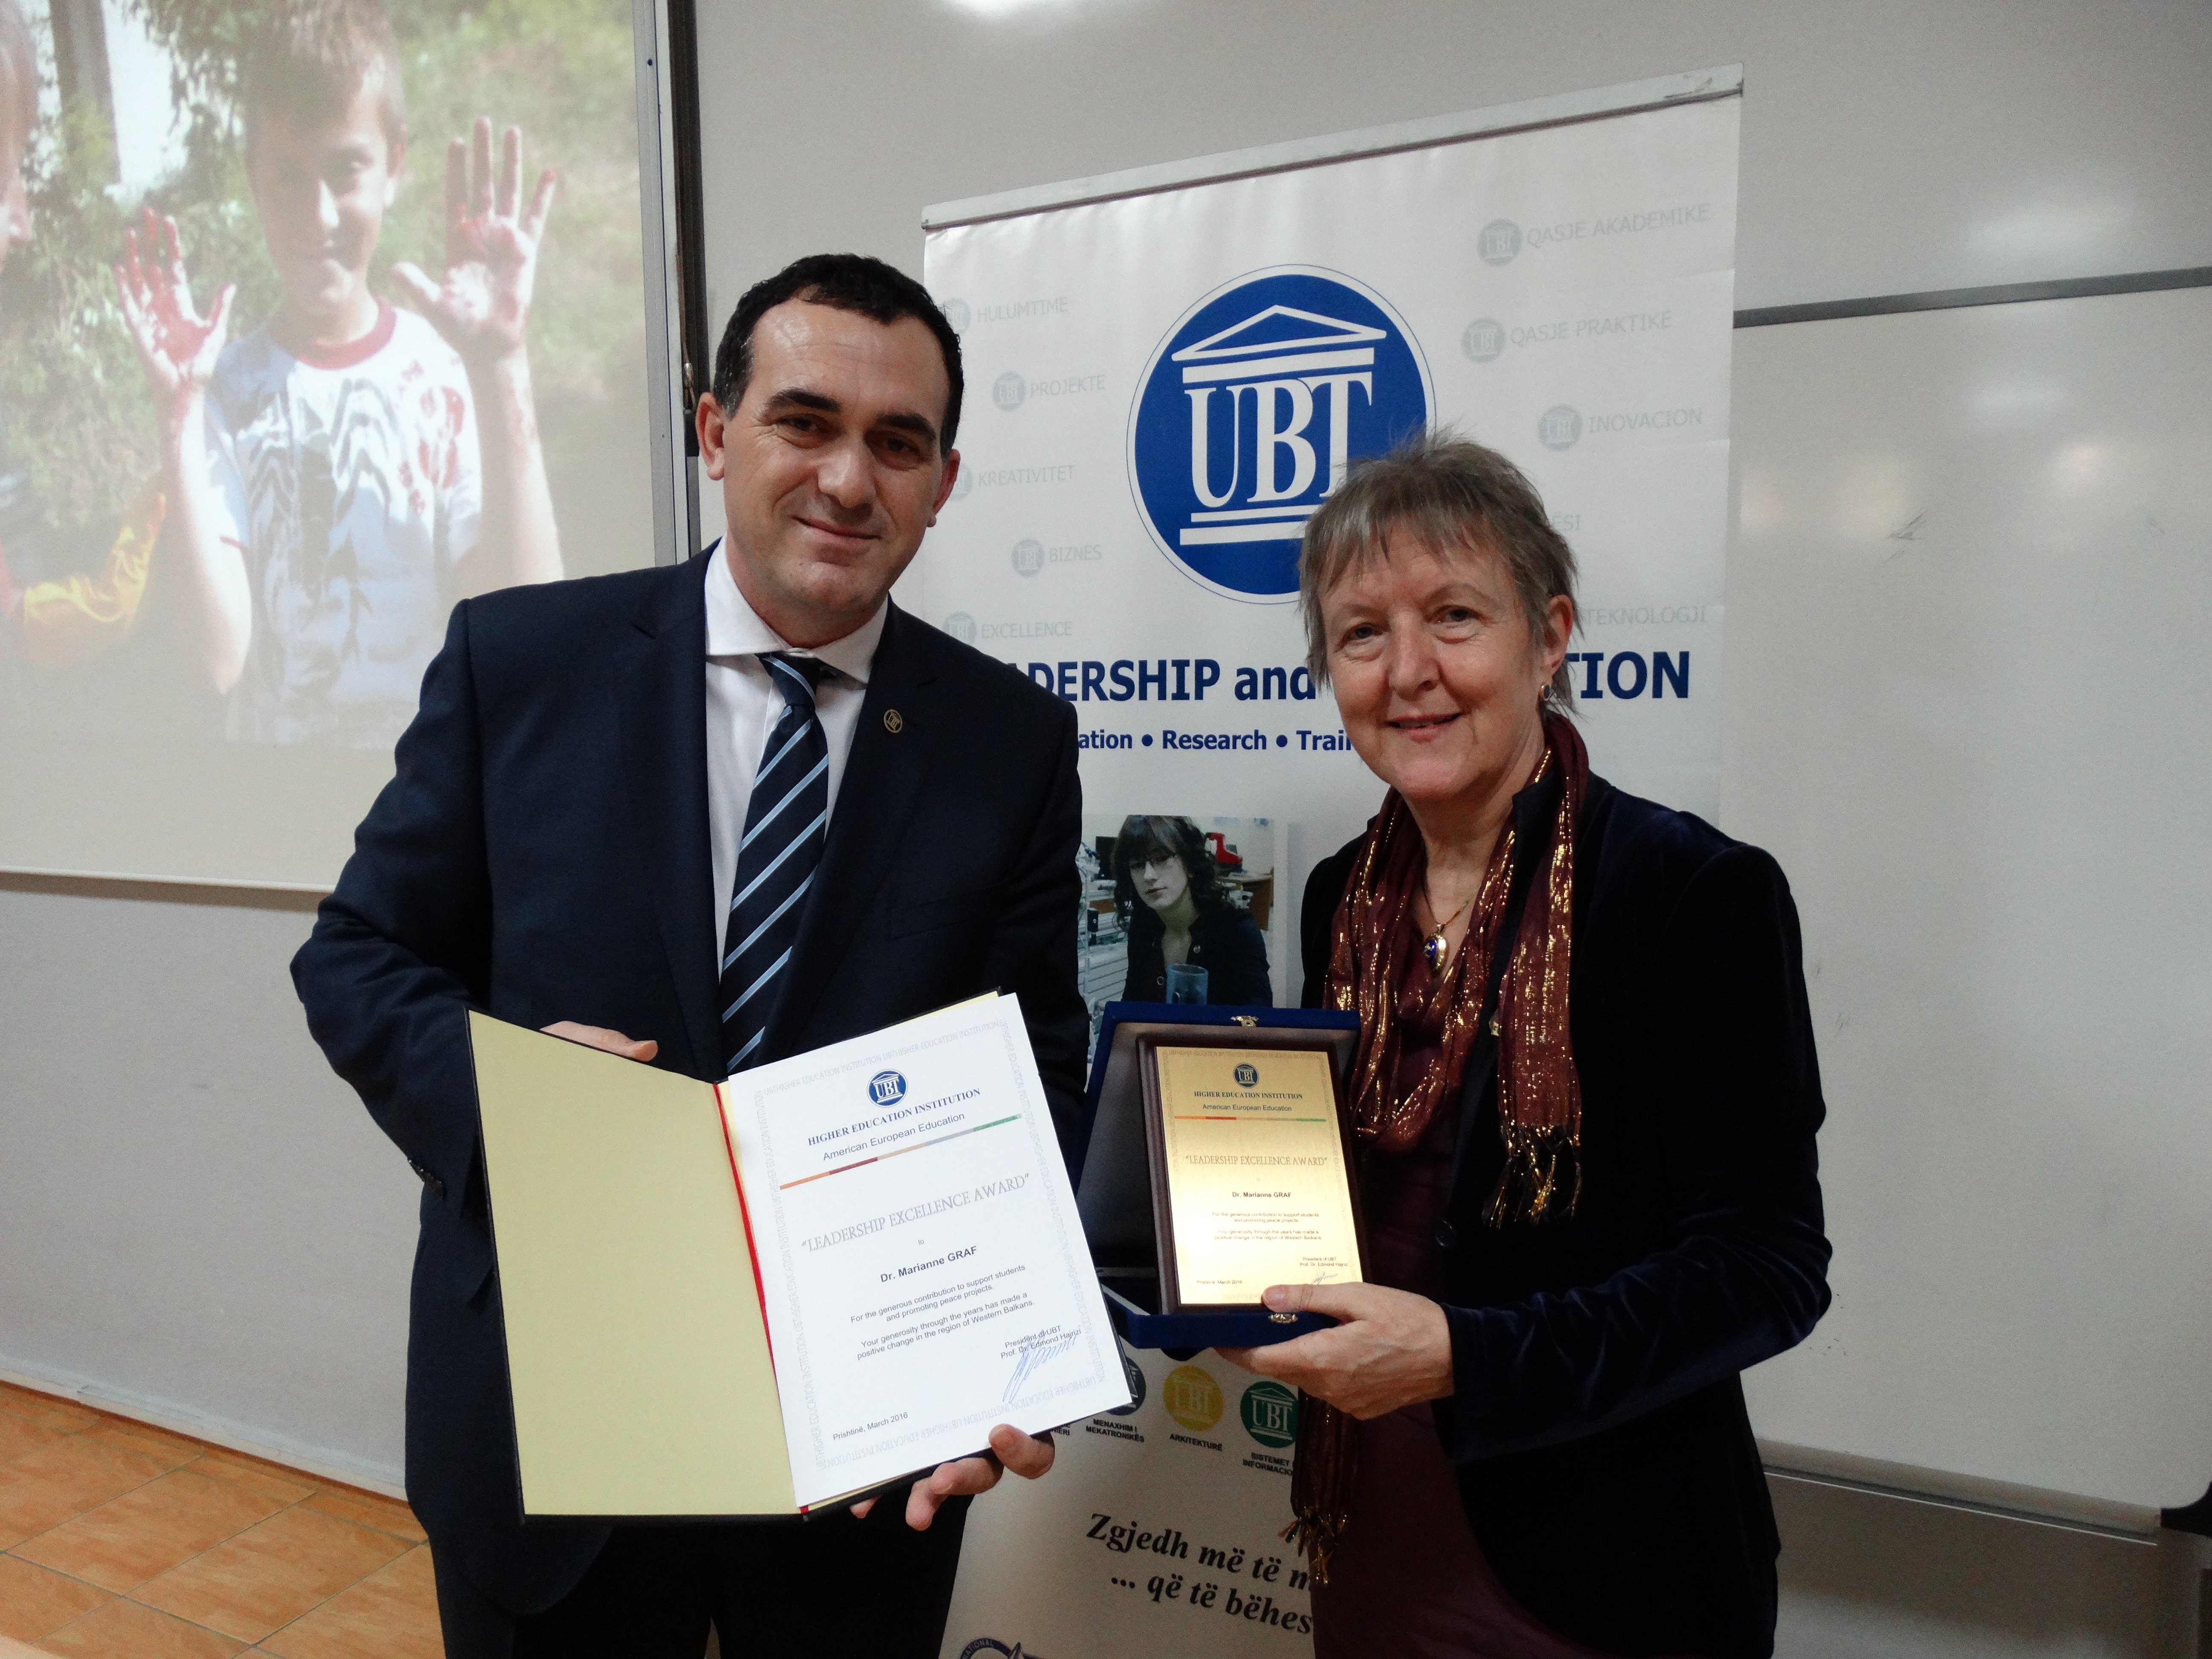 UBT ia jep çmimin “Exellence Lidership Award” humanistes austriake, Marianne Graf